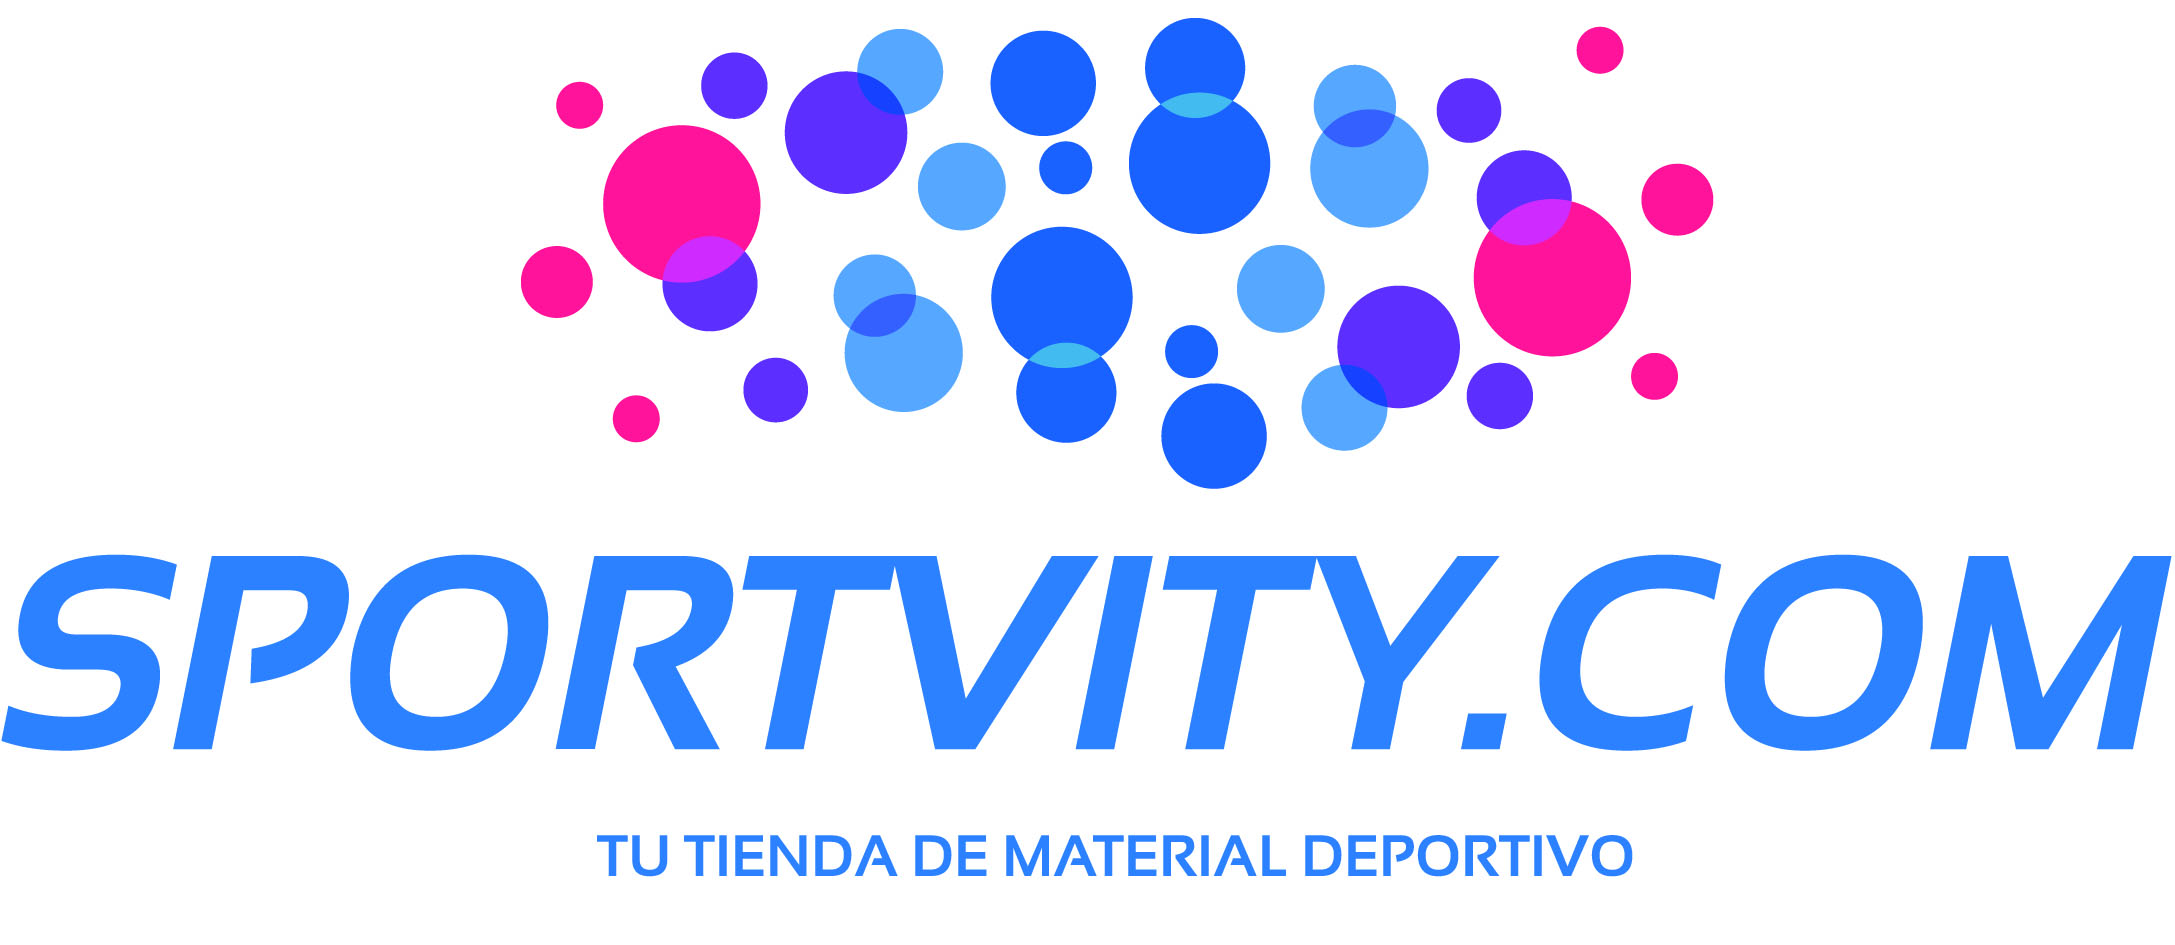 Sportivity_com_logo.jpg